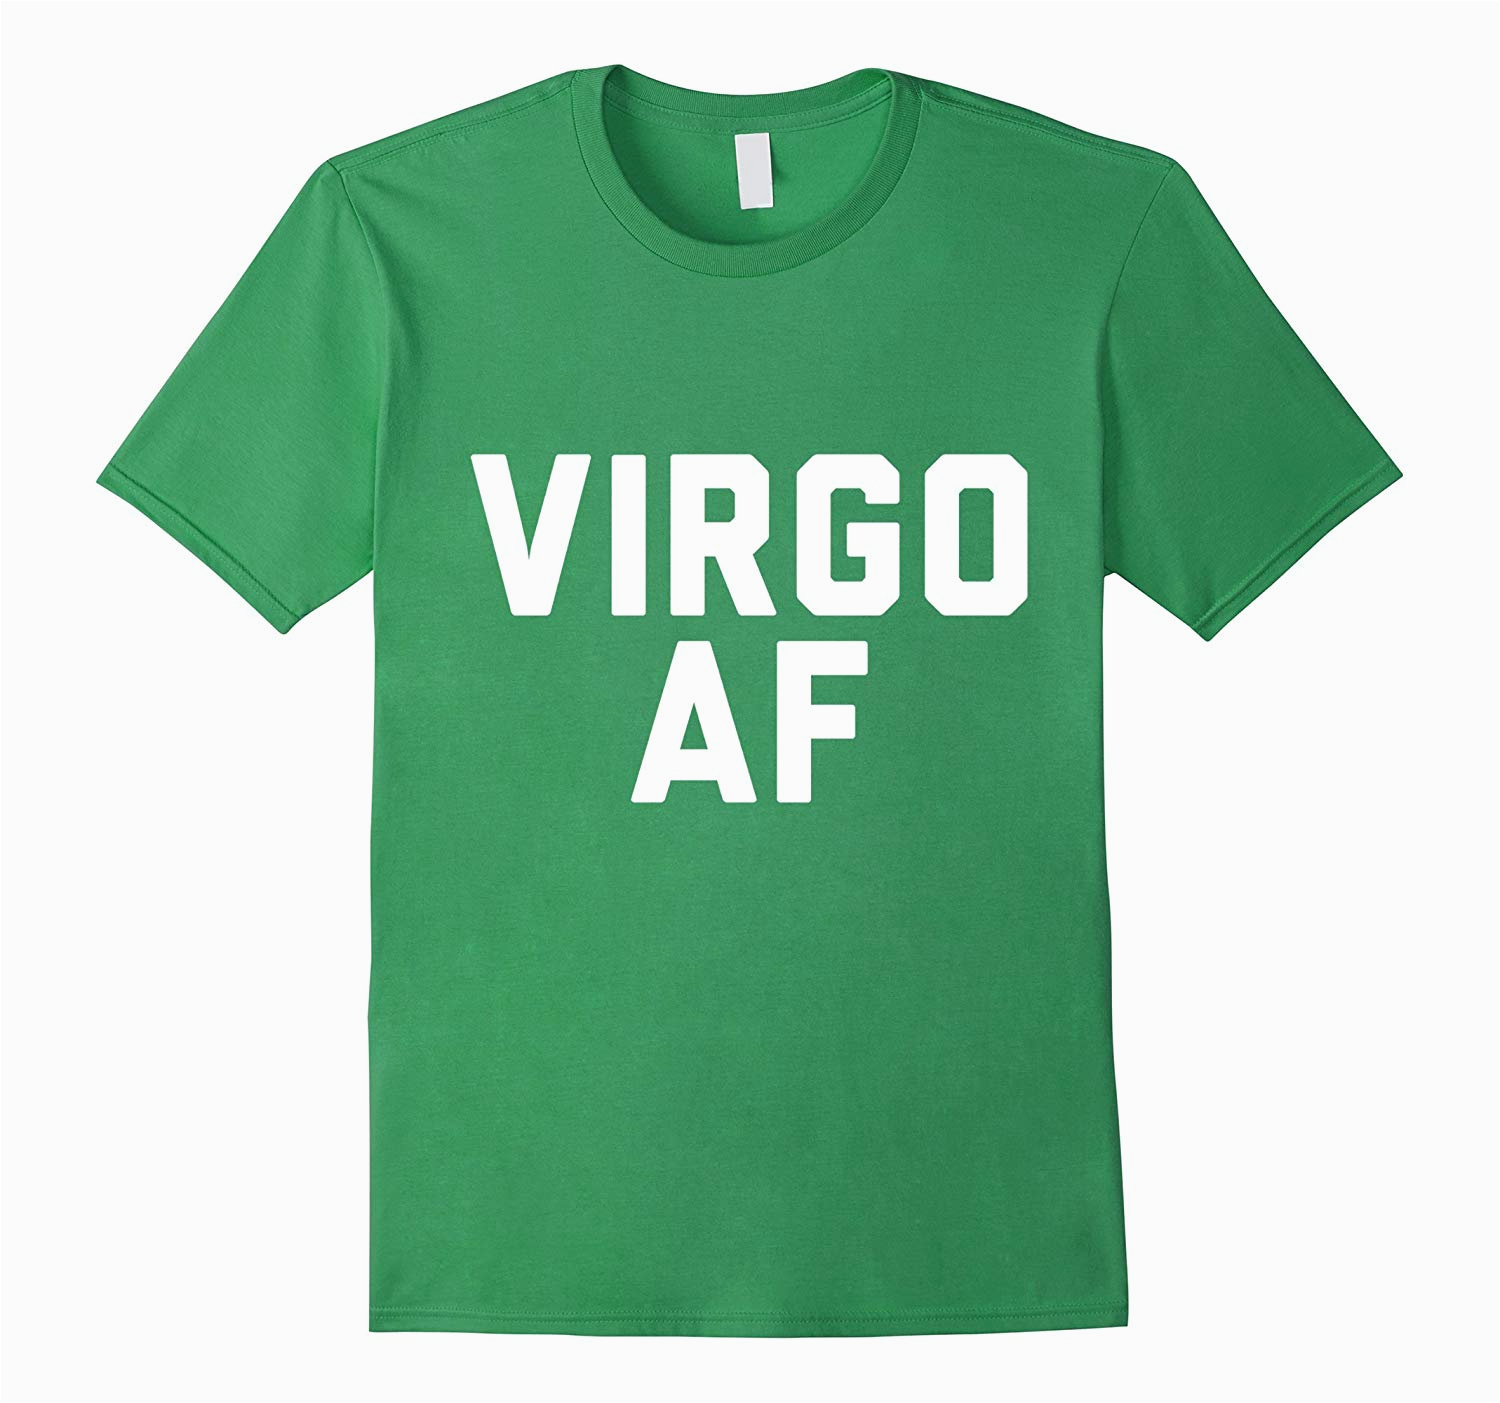 virgo af t shirt horoscope funny shirt men women gift cl